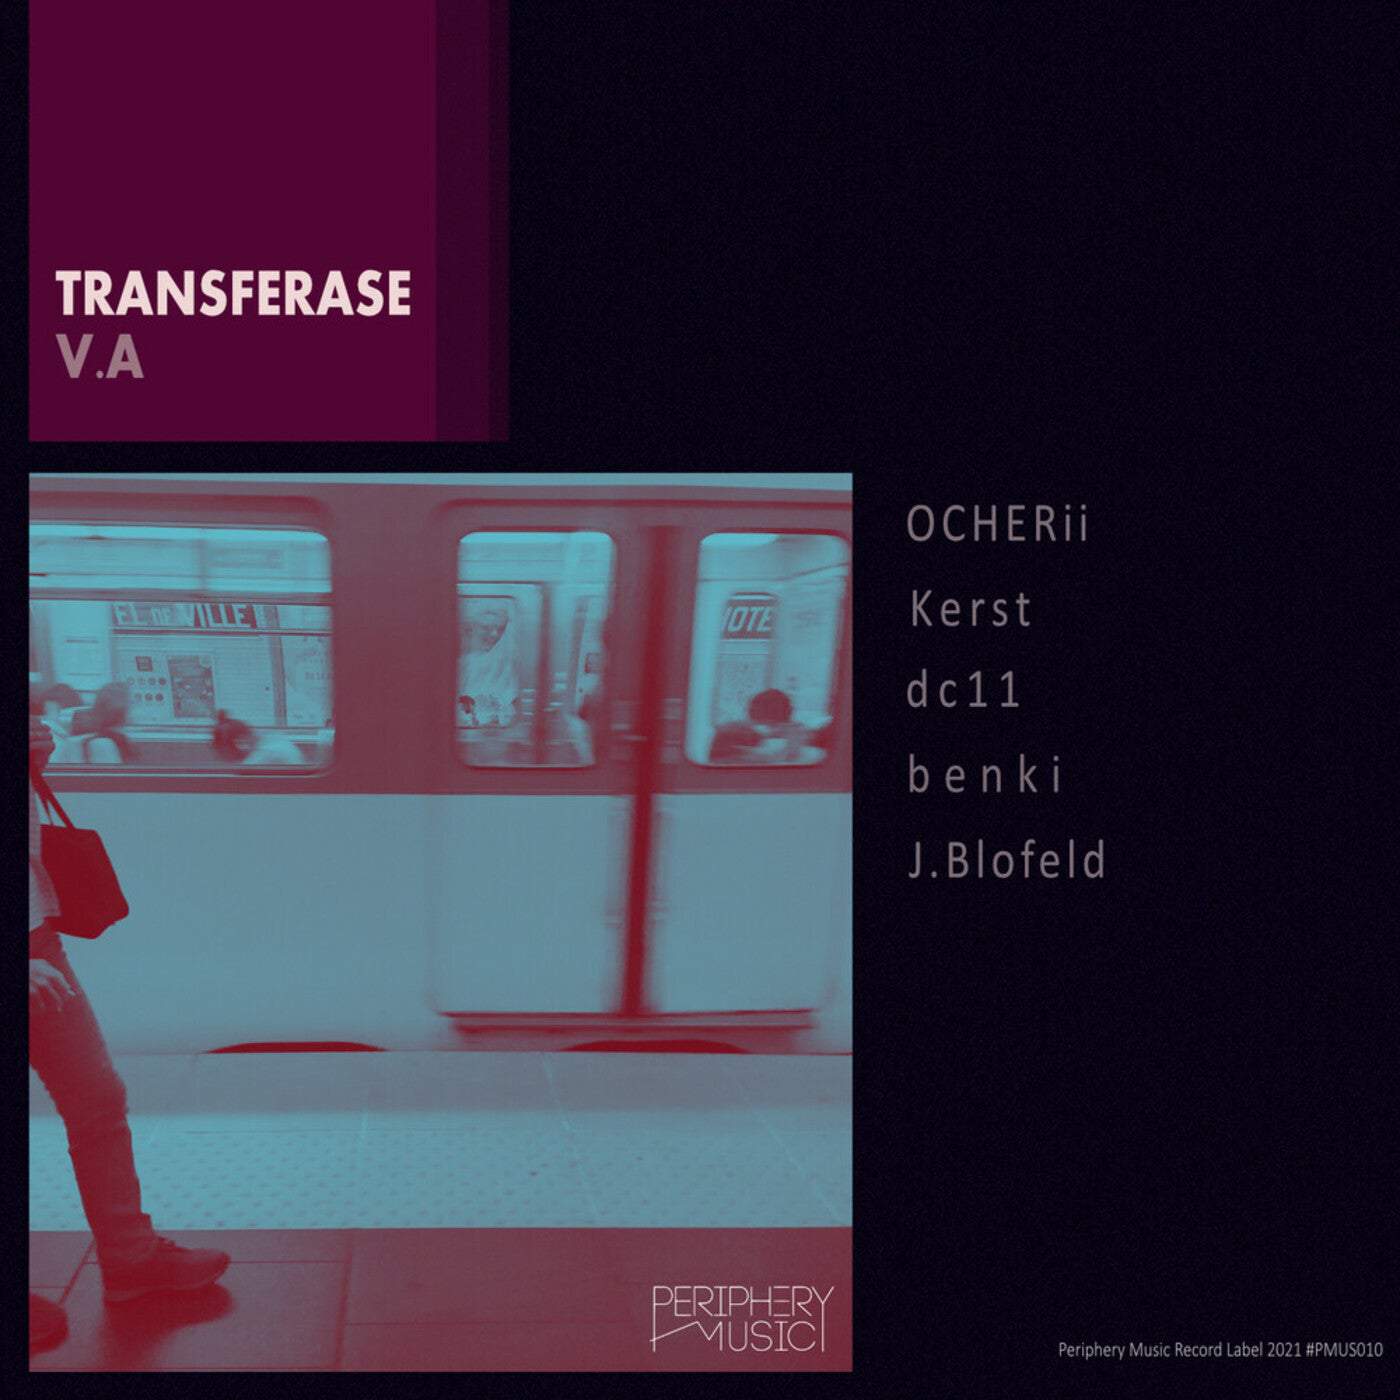 image cover: OCHERii, Kerst, dc11, Benki, J.Blofeld - Transferase / PMUS010